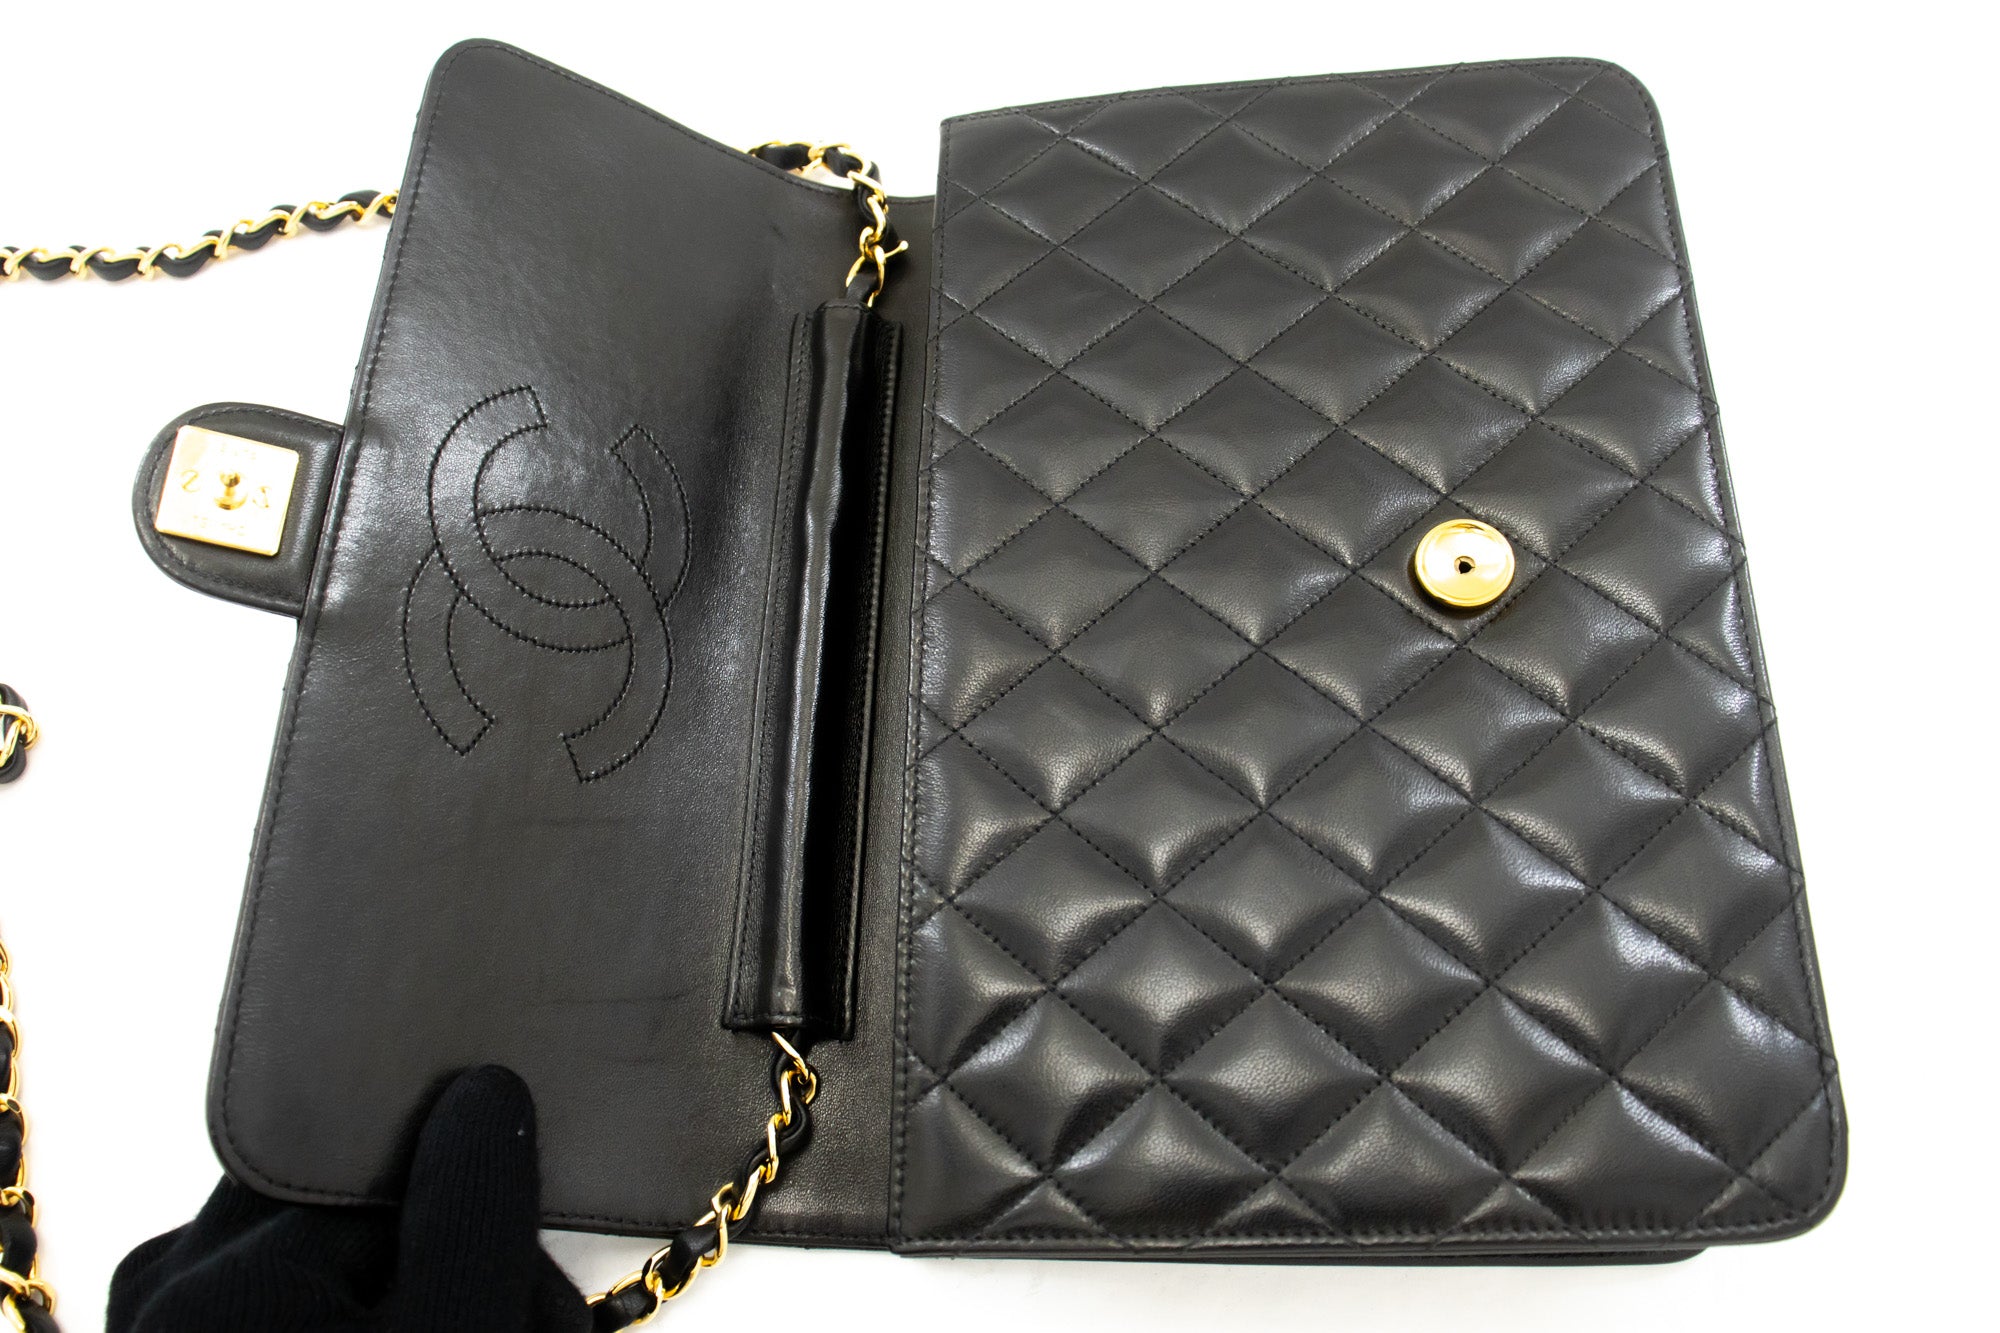 Chanel Chain Shoulder Bag Clutch Black Quilted Flap Lambskin Purse j66